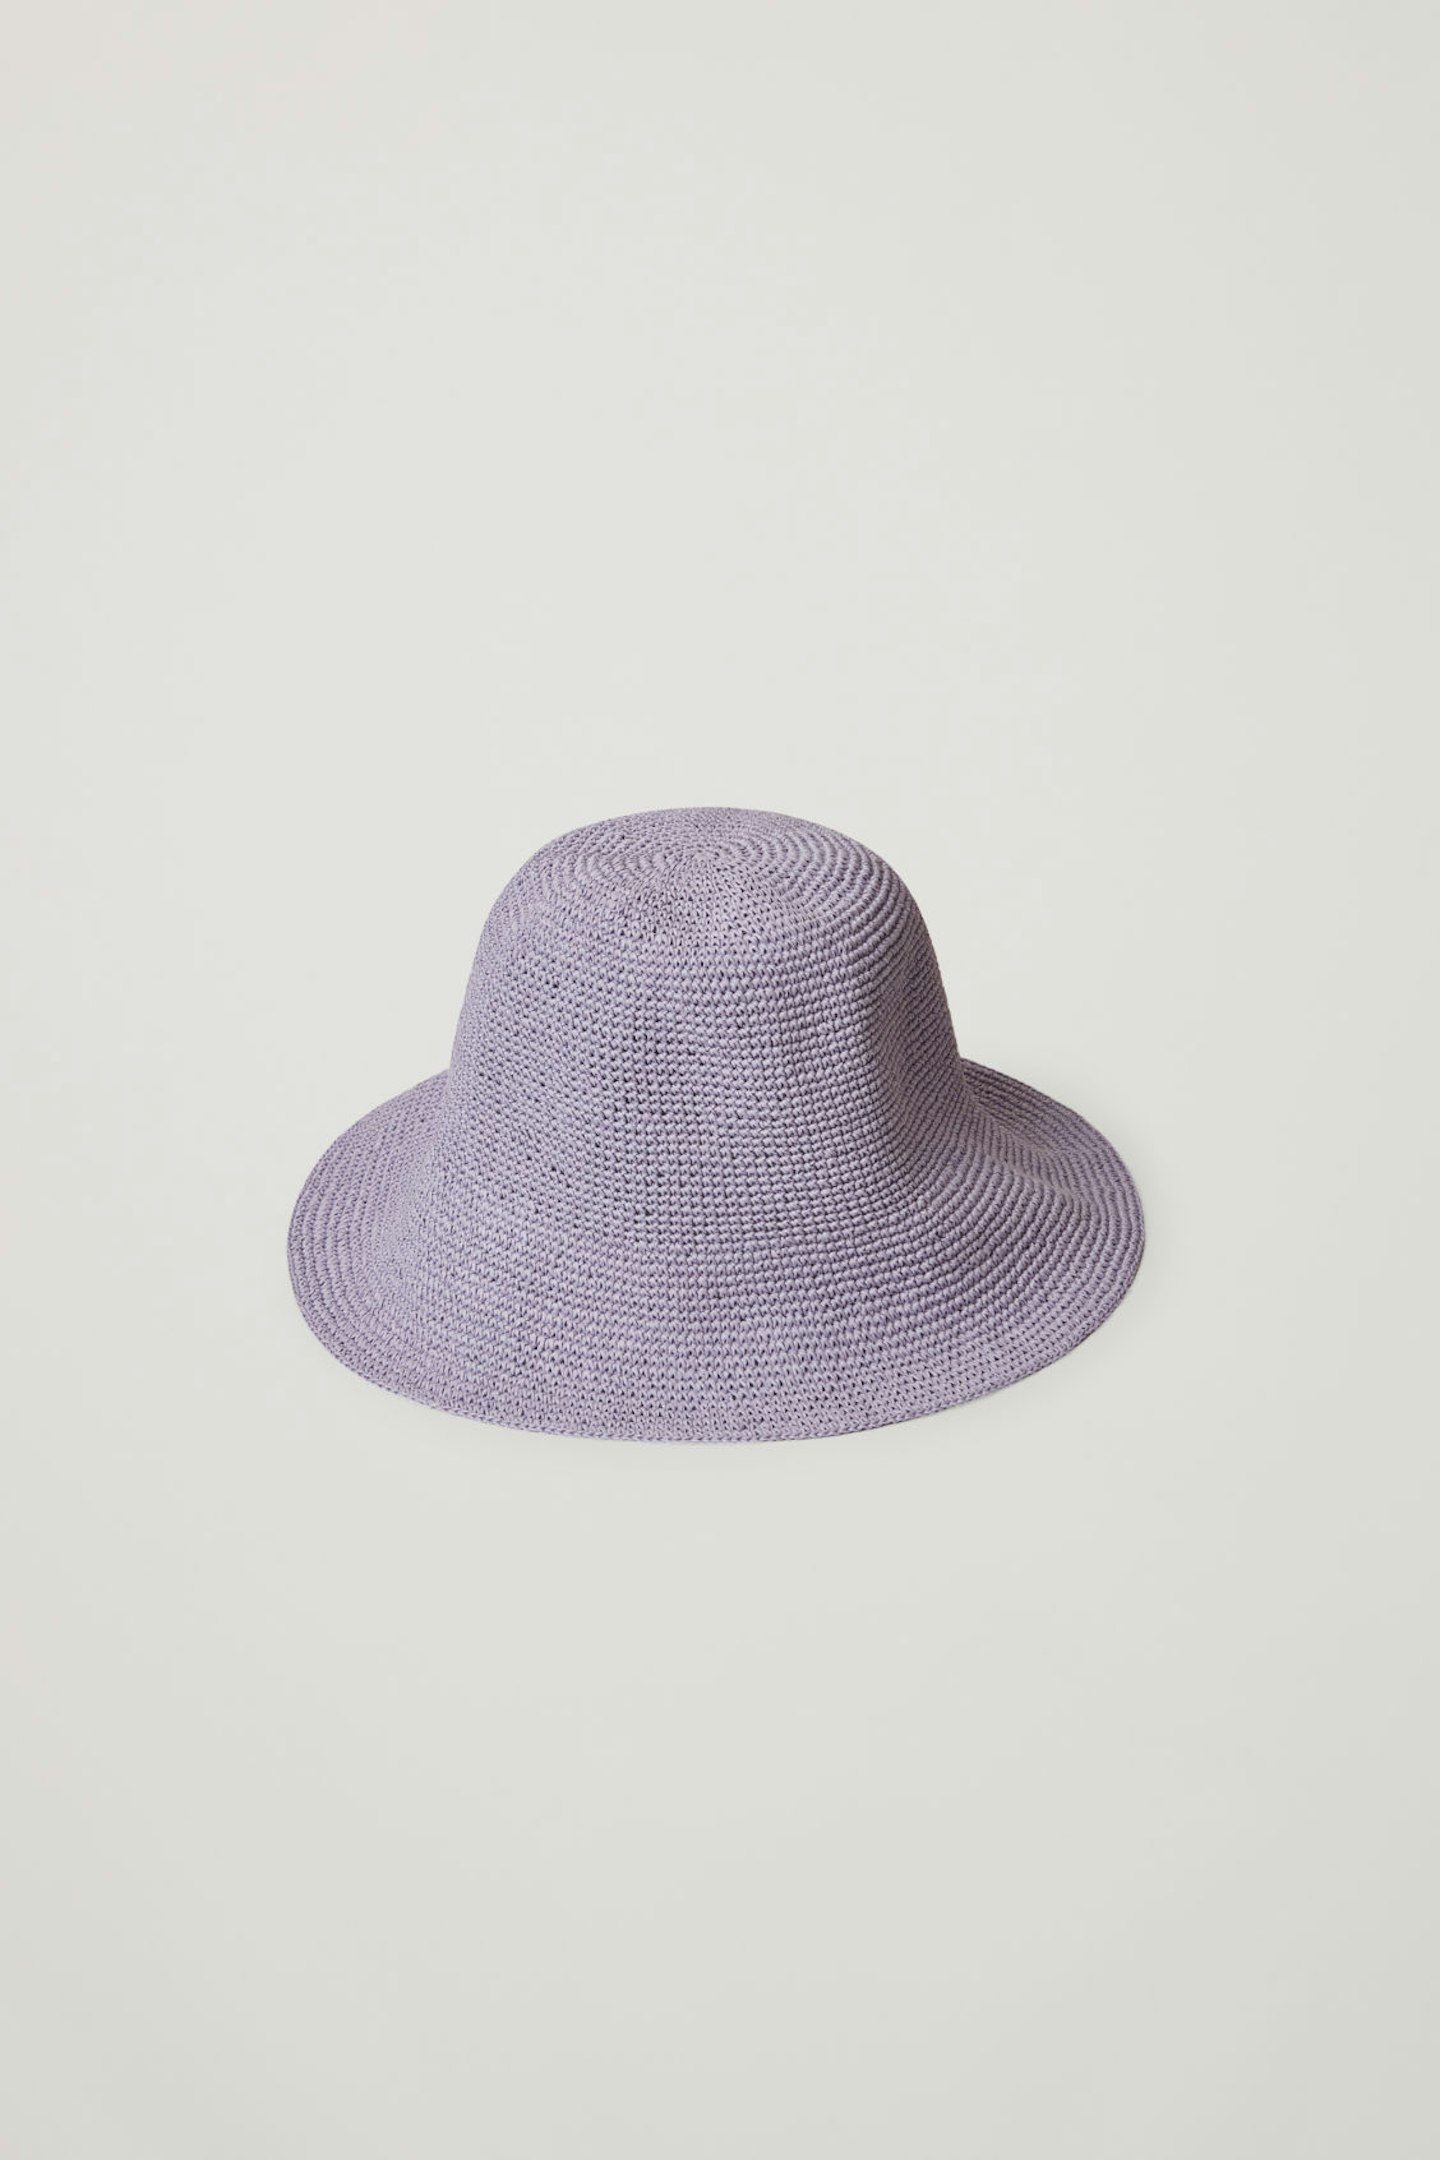 COS, Crochet Paper Hat, £29